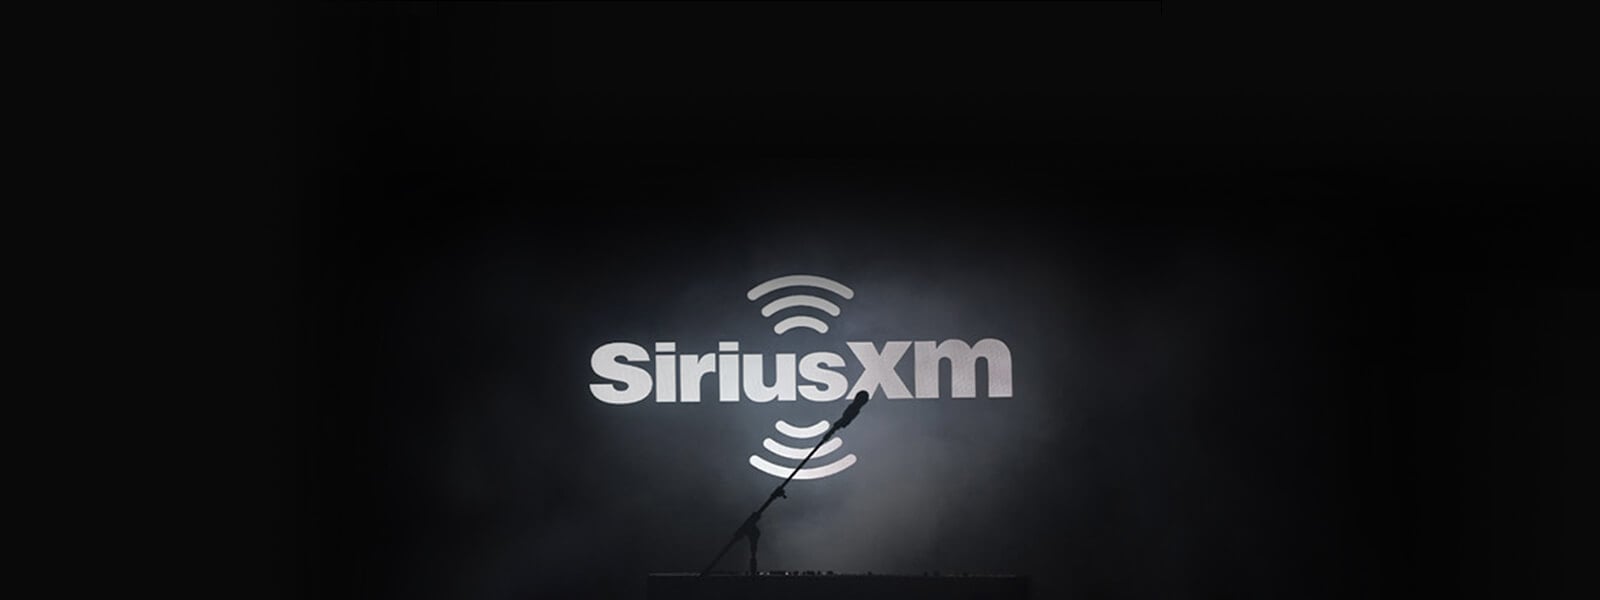 SiriusXM logo on black background